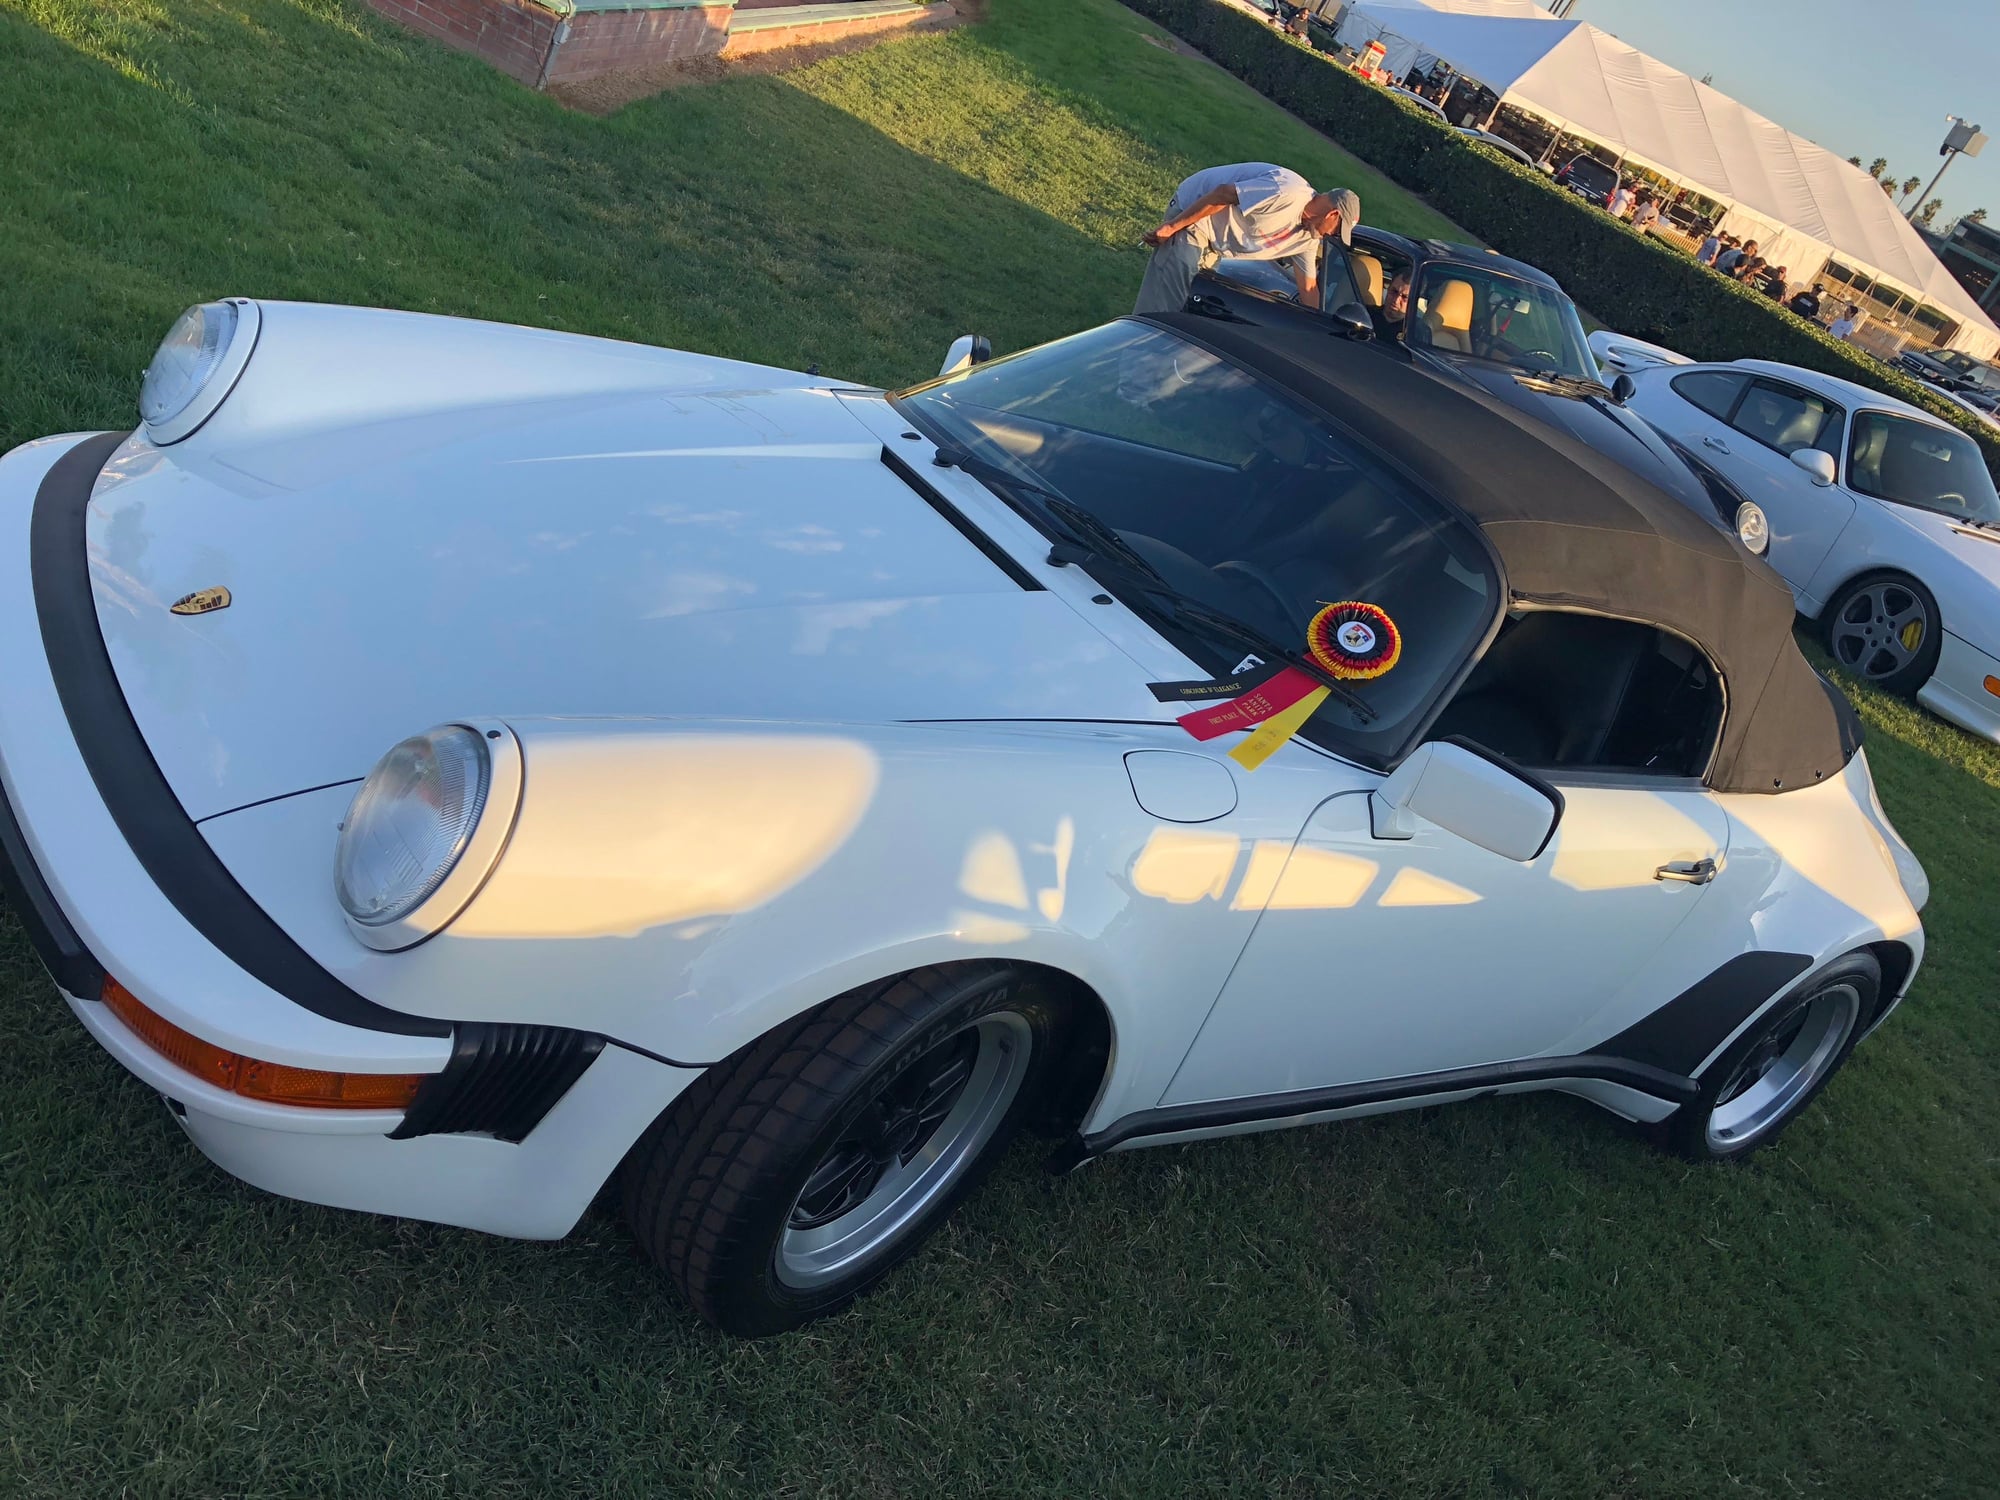 1989 Porsche 911 - 911 Porsche Speedster - 1989 - Used - VIN WPOEBO914KS173197 - 8,100 Miles - 3 cyl - Manual - Convertible - White - Newport Beach, CA 92661, United States